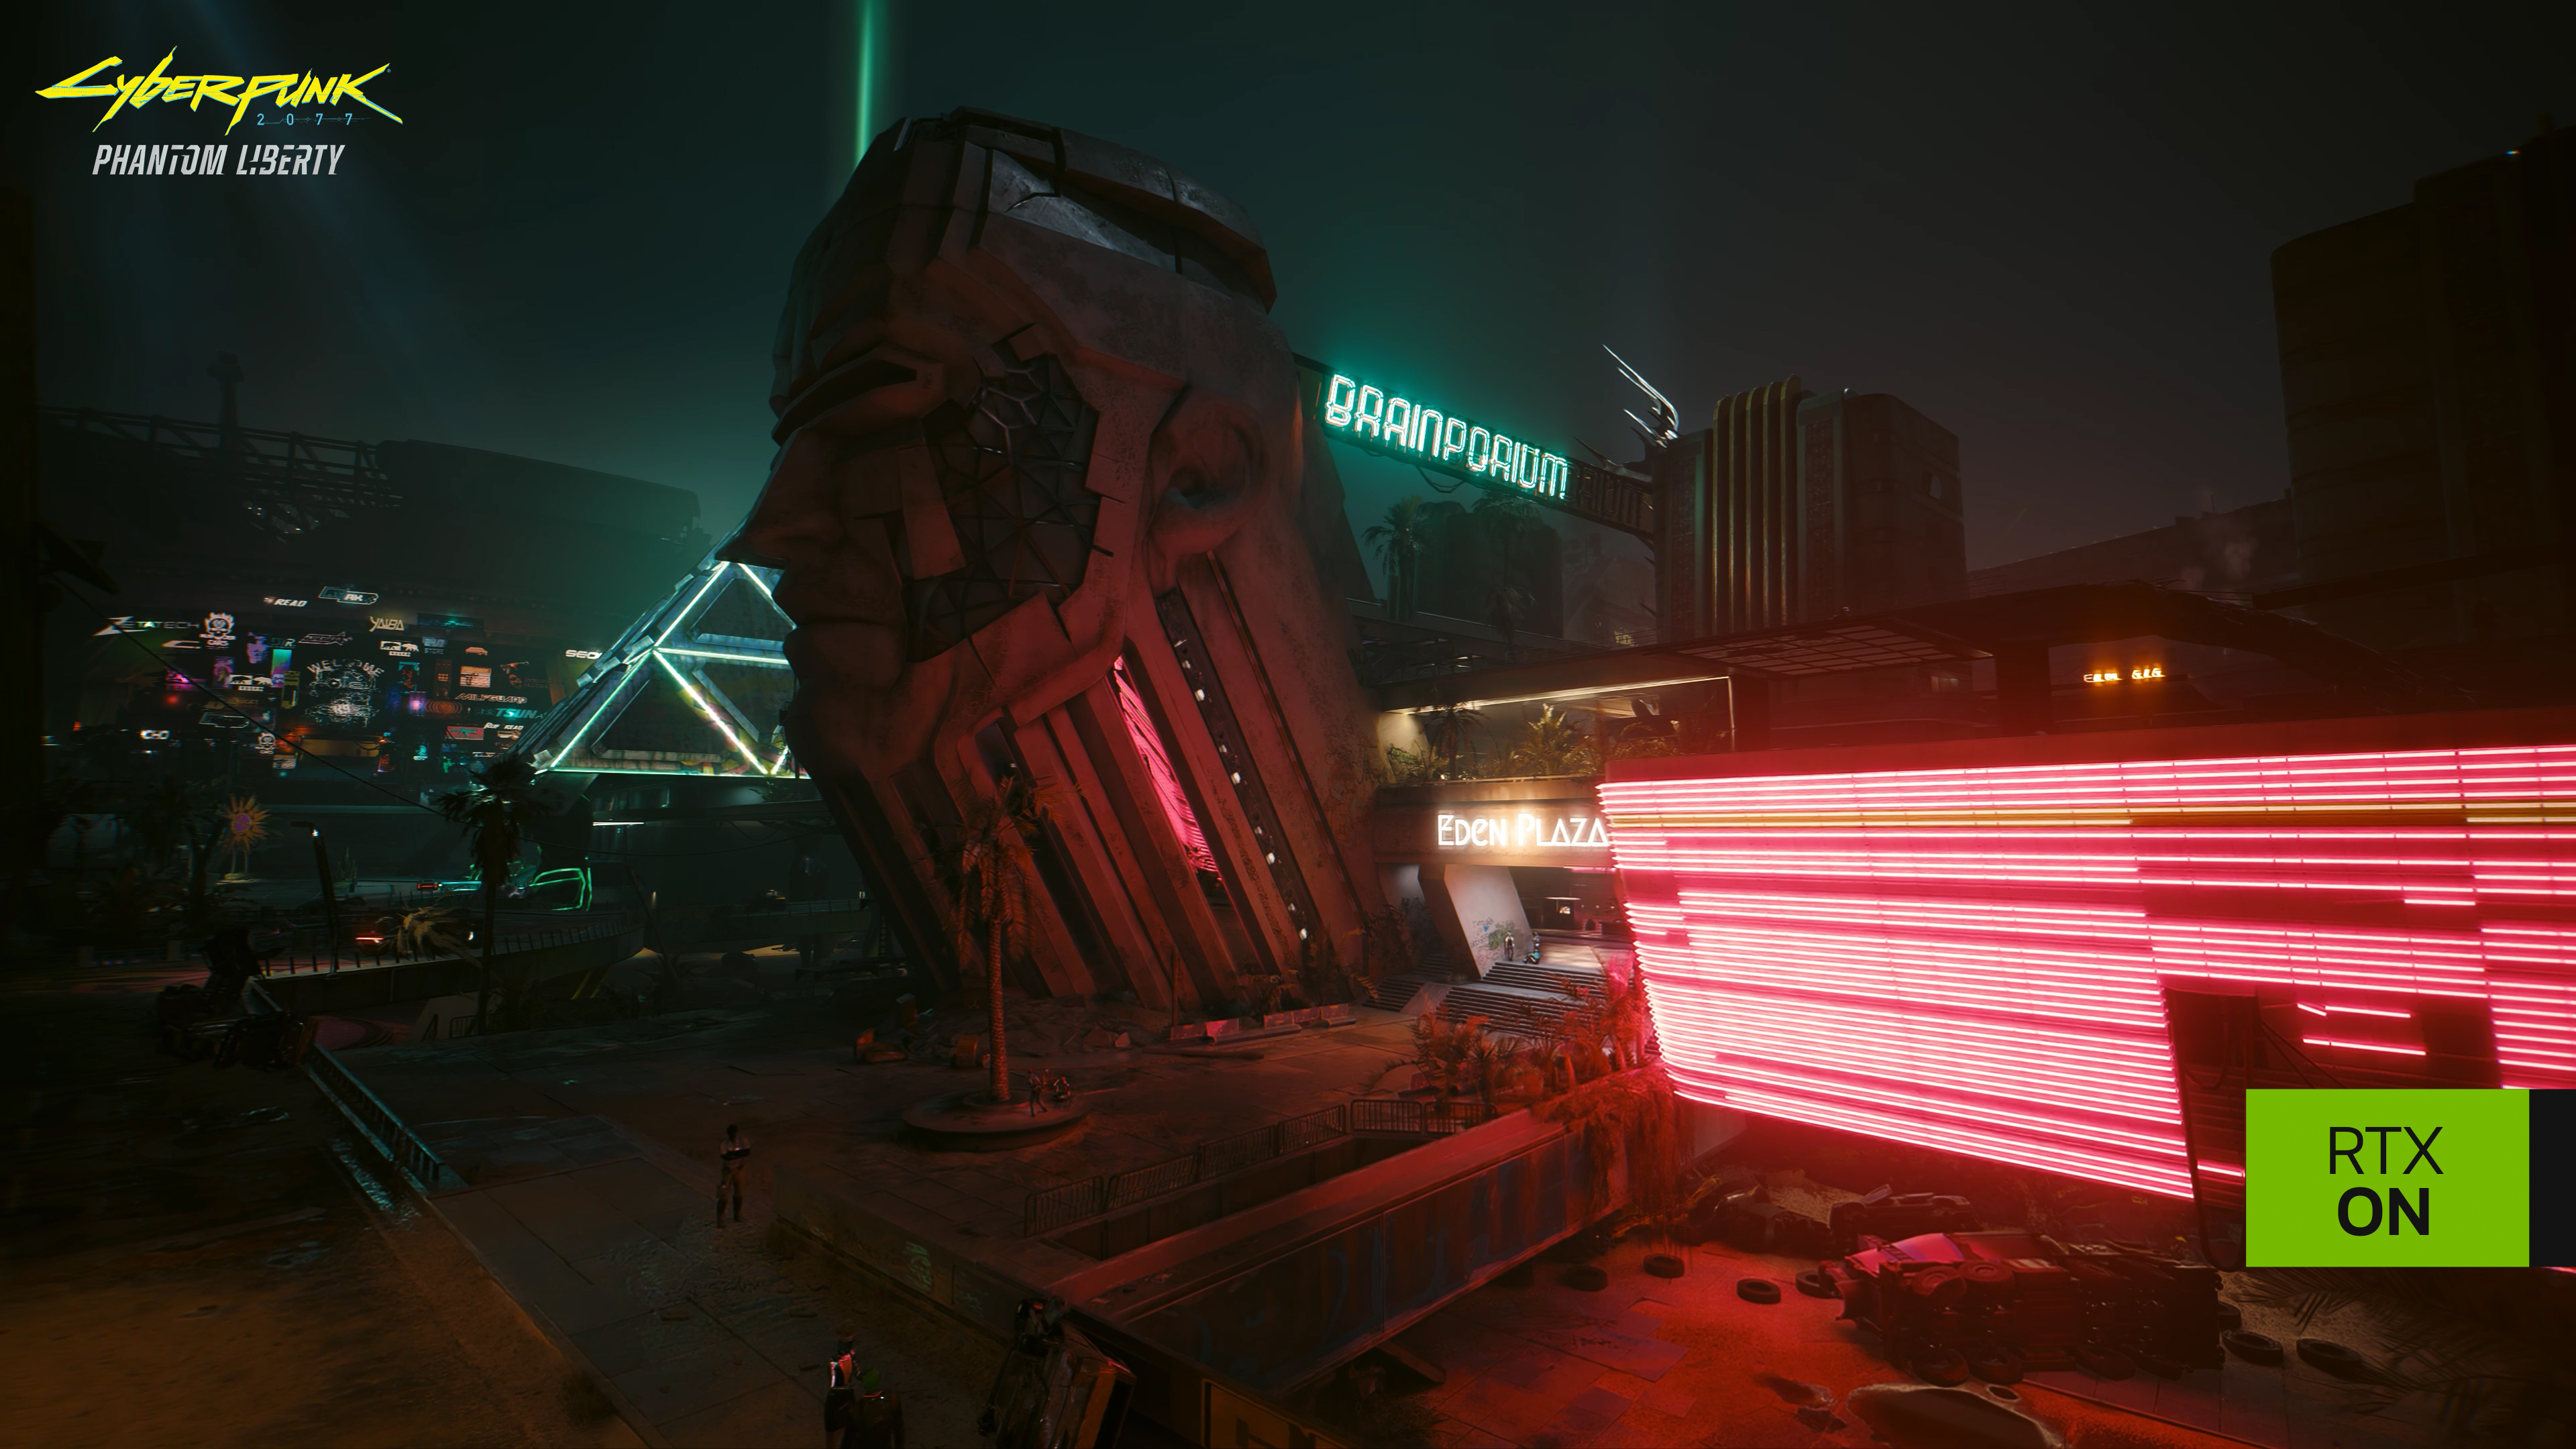 Cyberpunk 2077's overdrive mode adds beautiful ray tracing